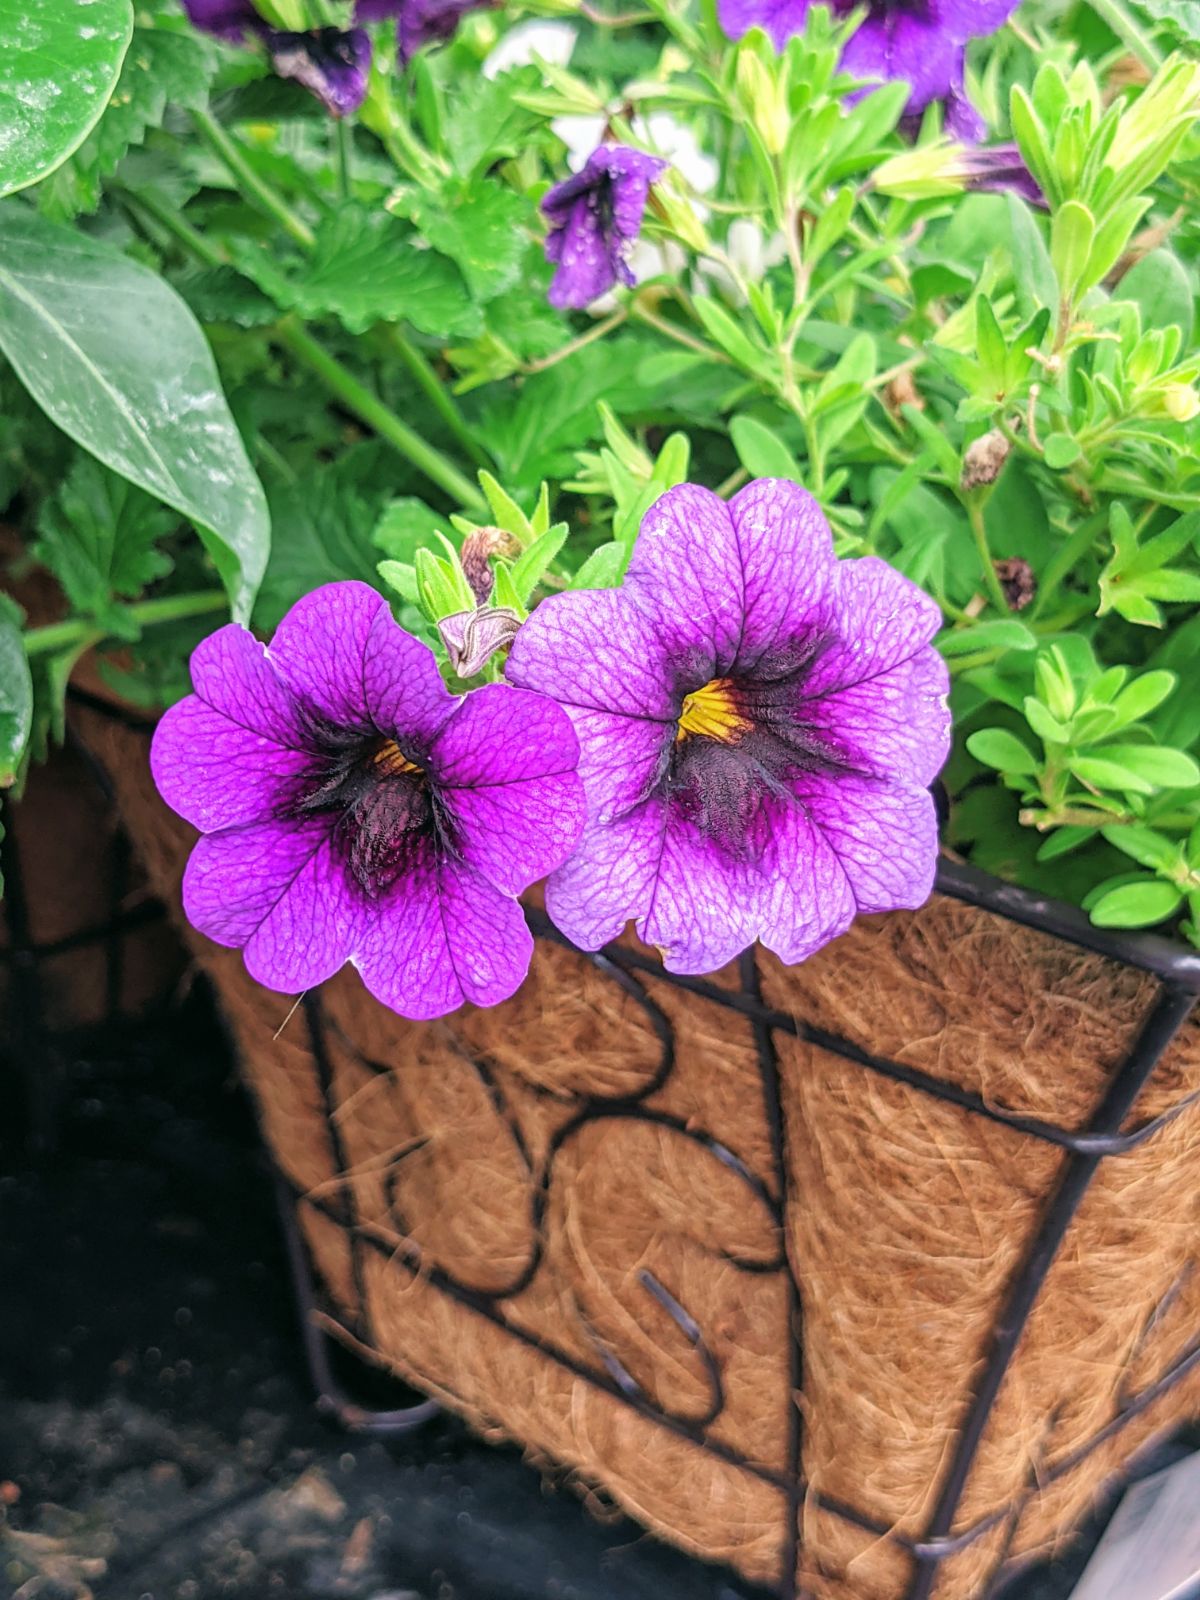 Purple petunias in a flower basket planter